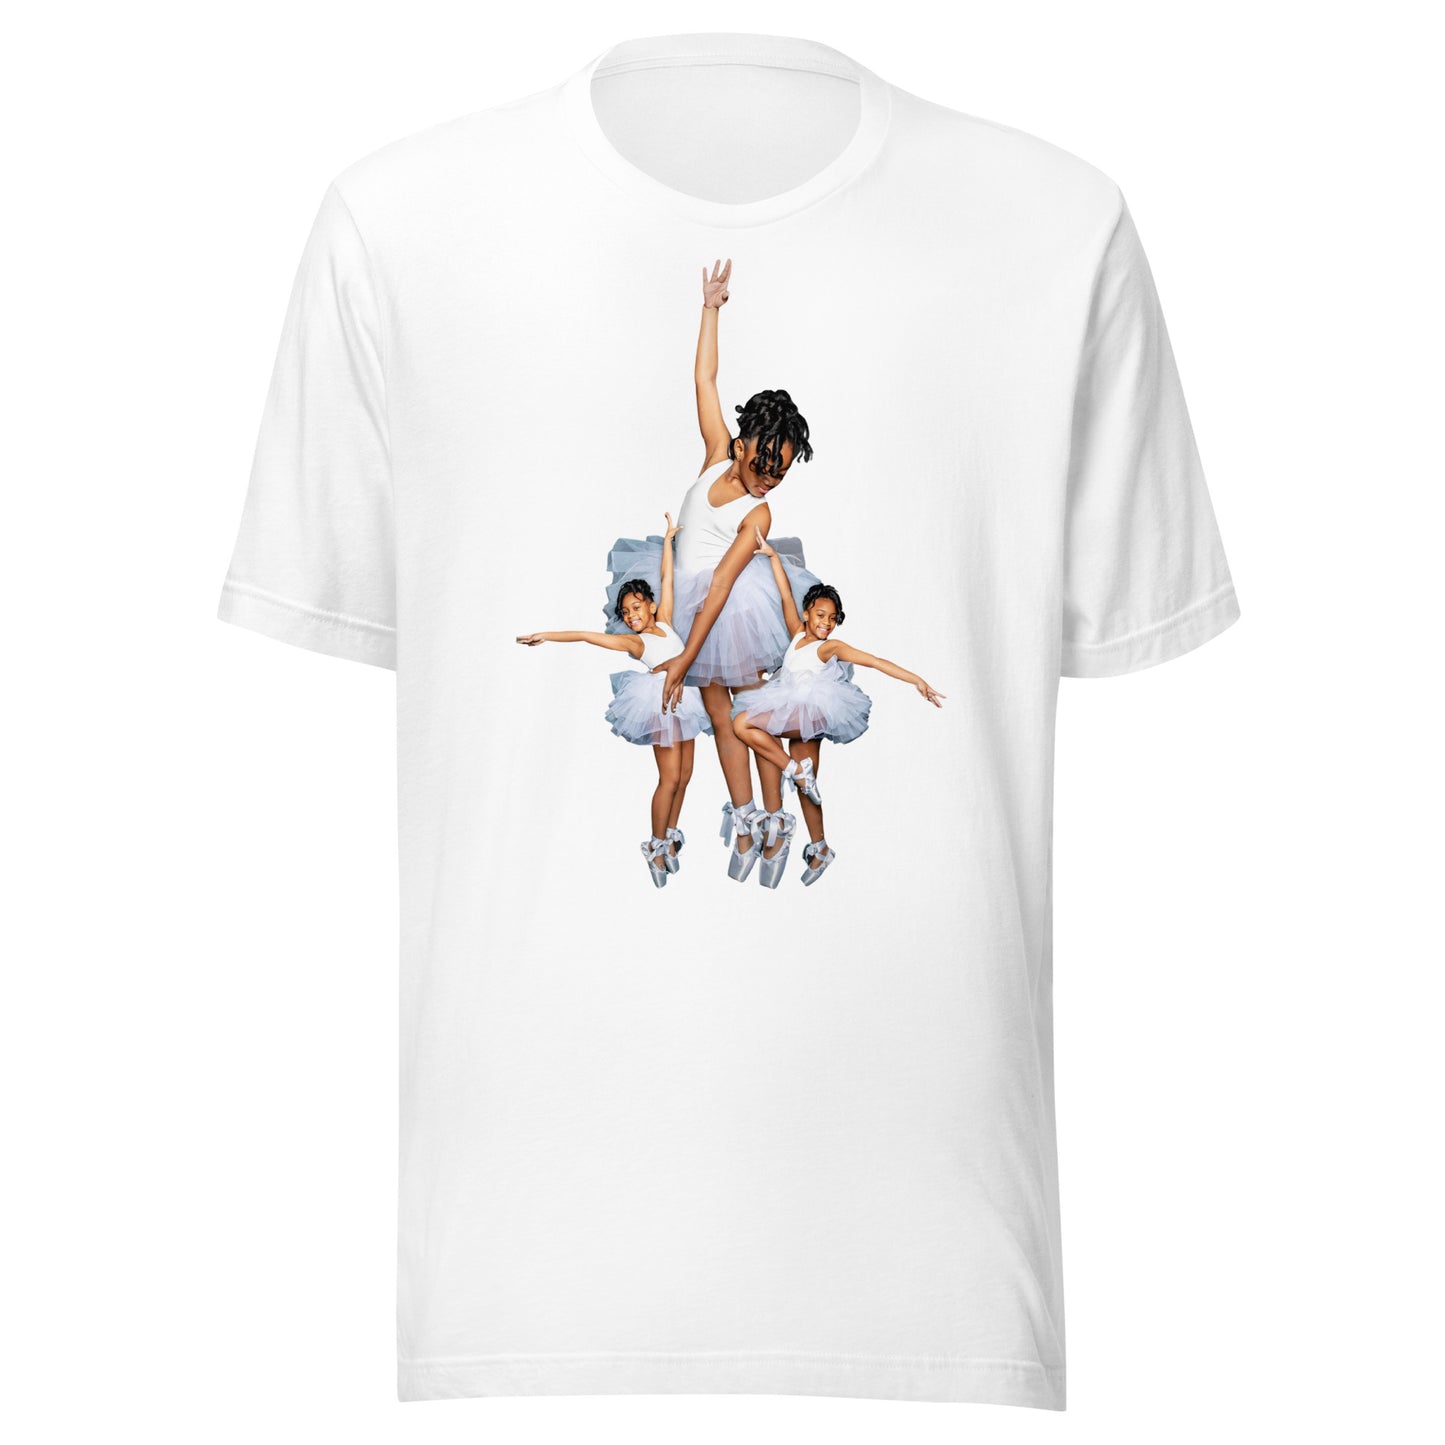 "Ballerina Dreams" Unisex T-Shirt